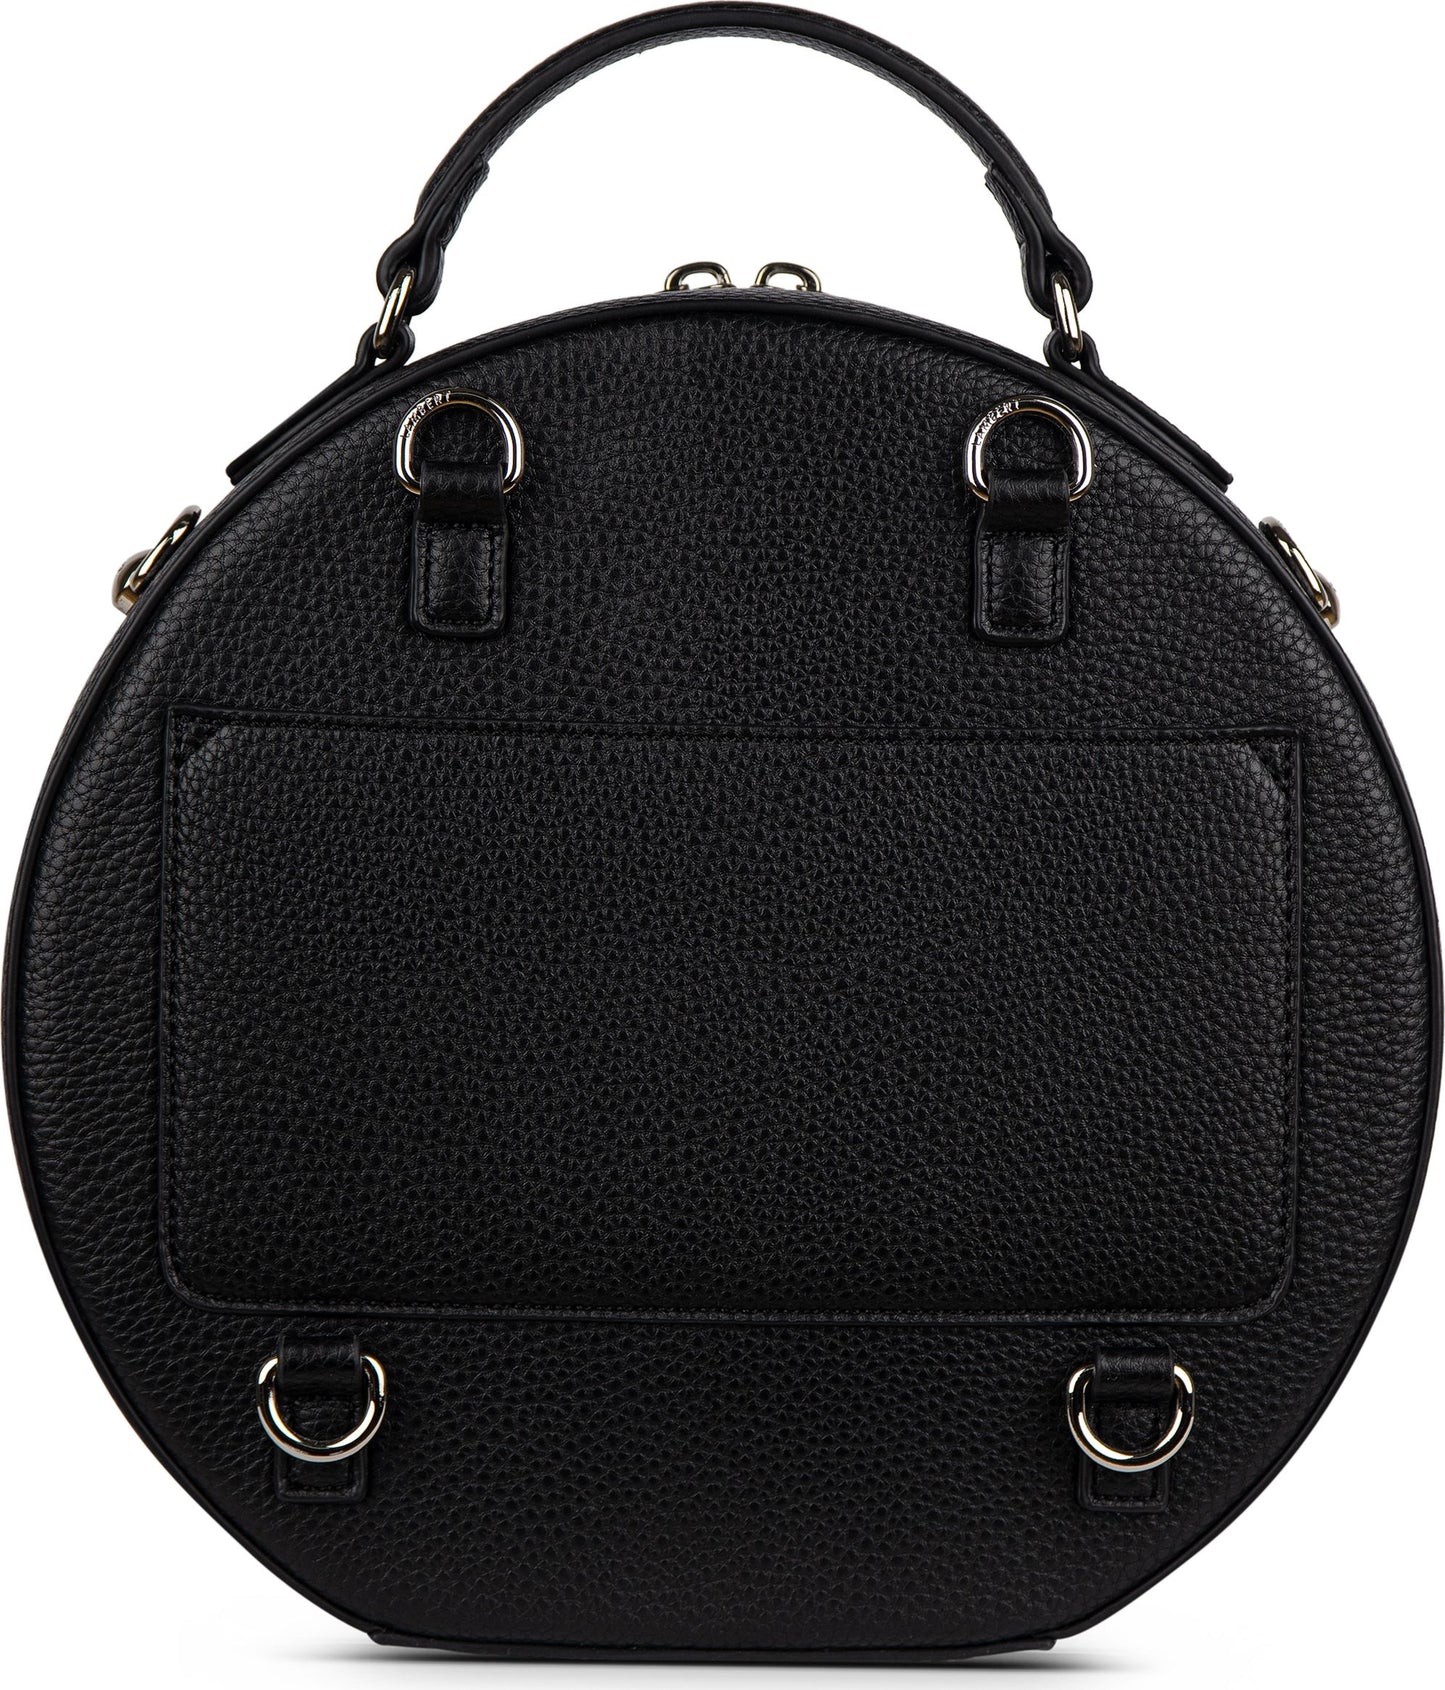 Lambert Accessories 3 In 1 Handbag Black Pebble